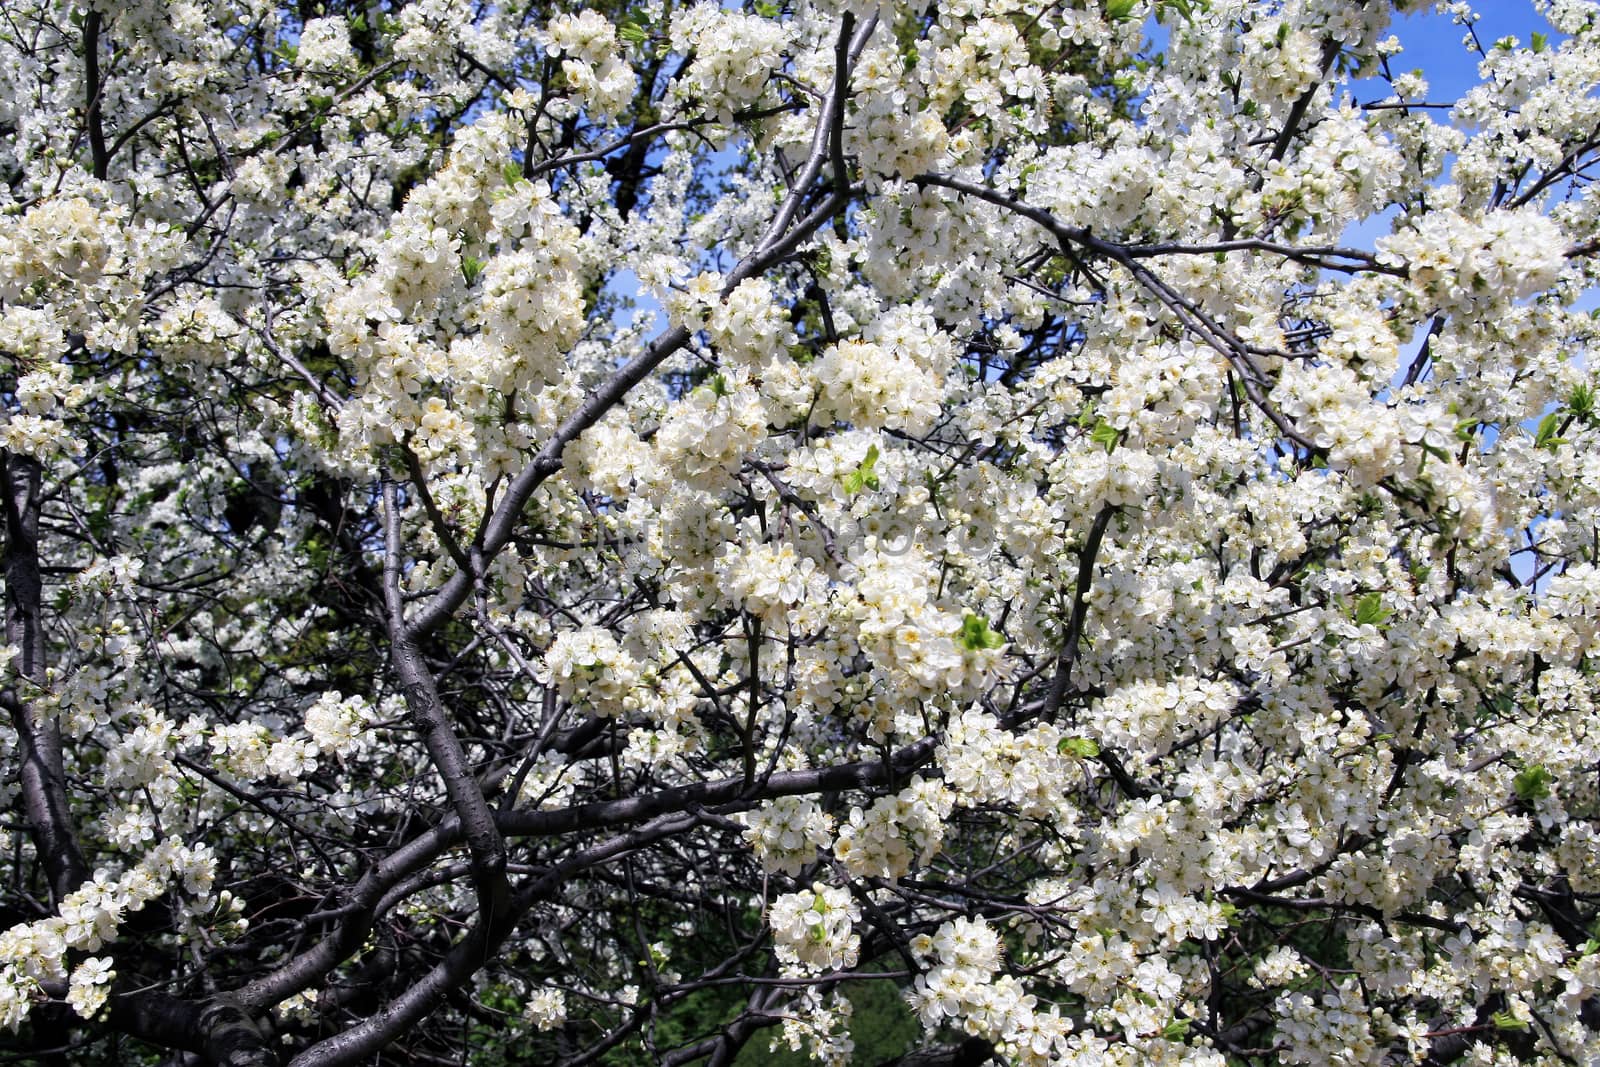 white blossom of apple trees in springtime